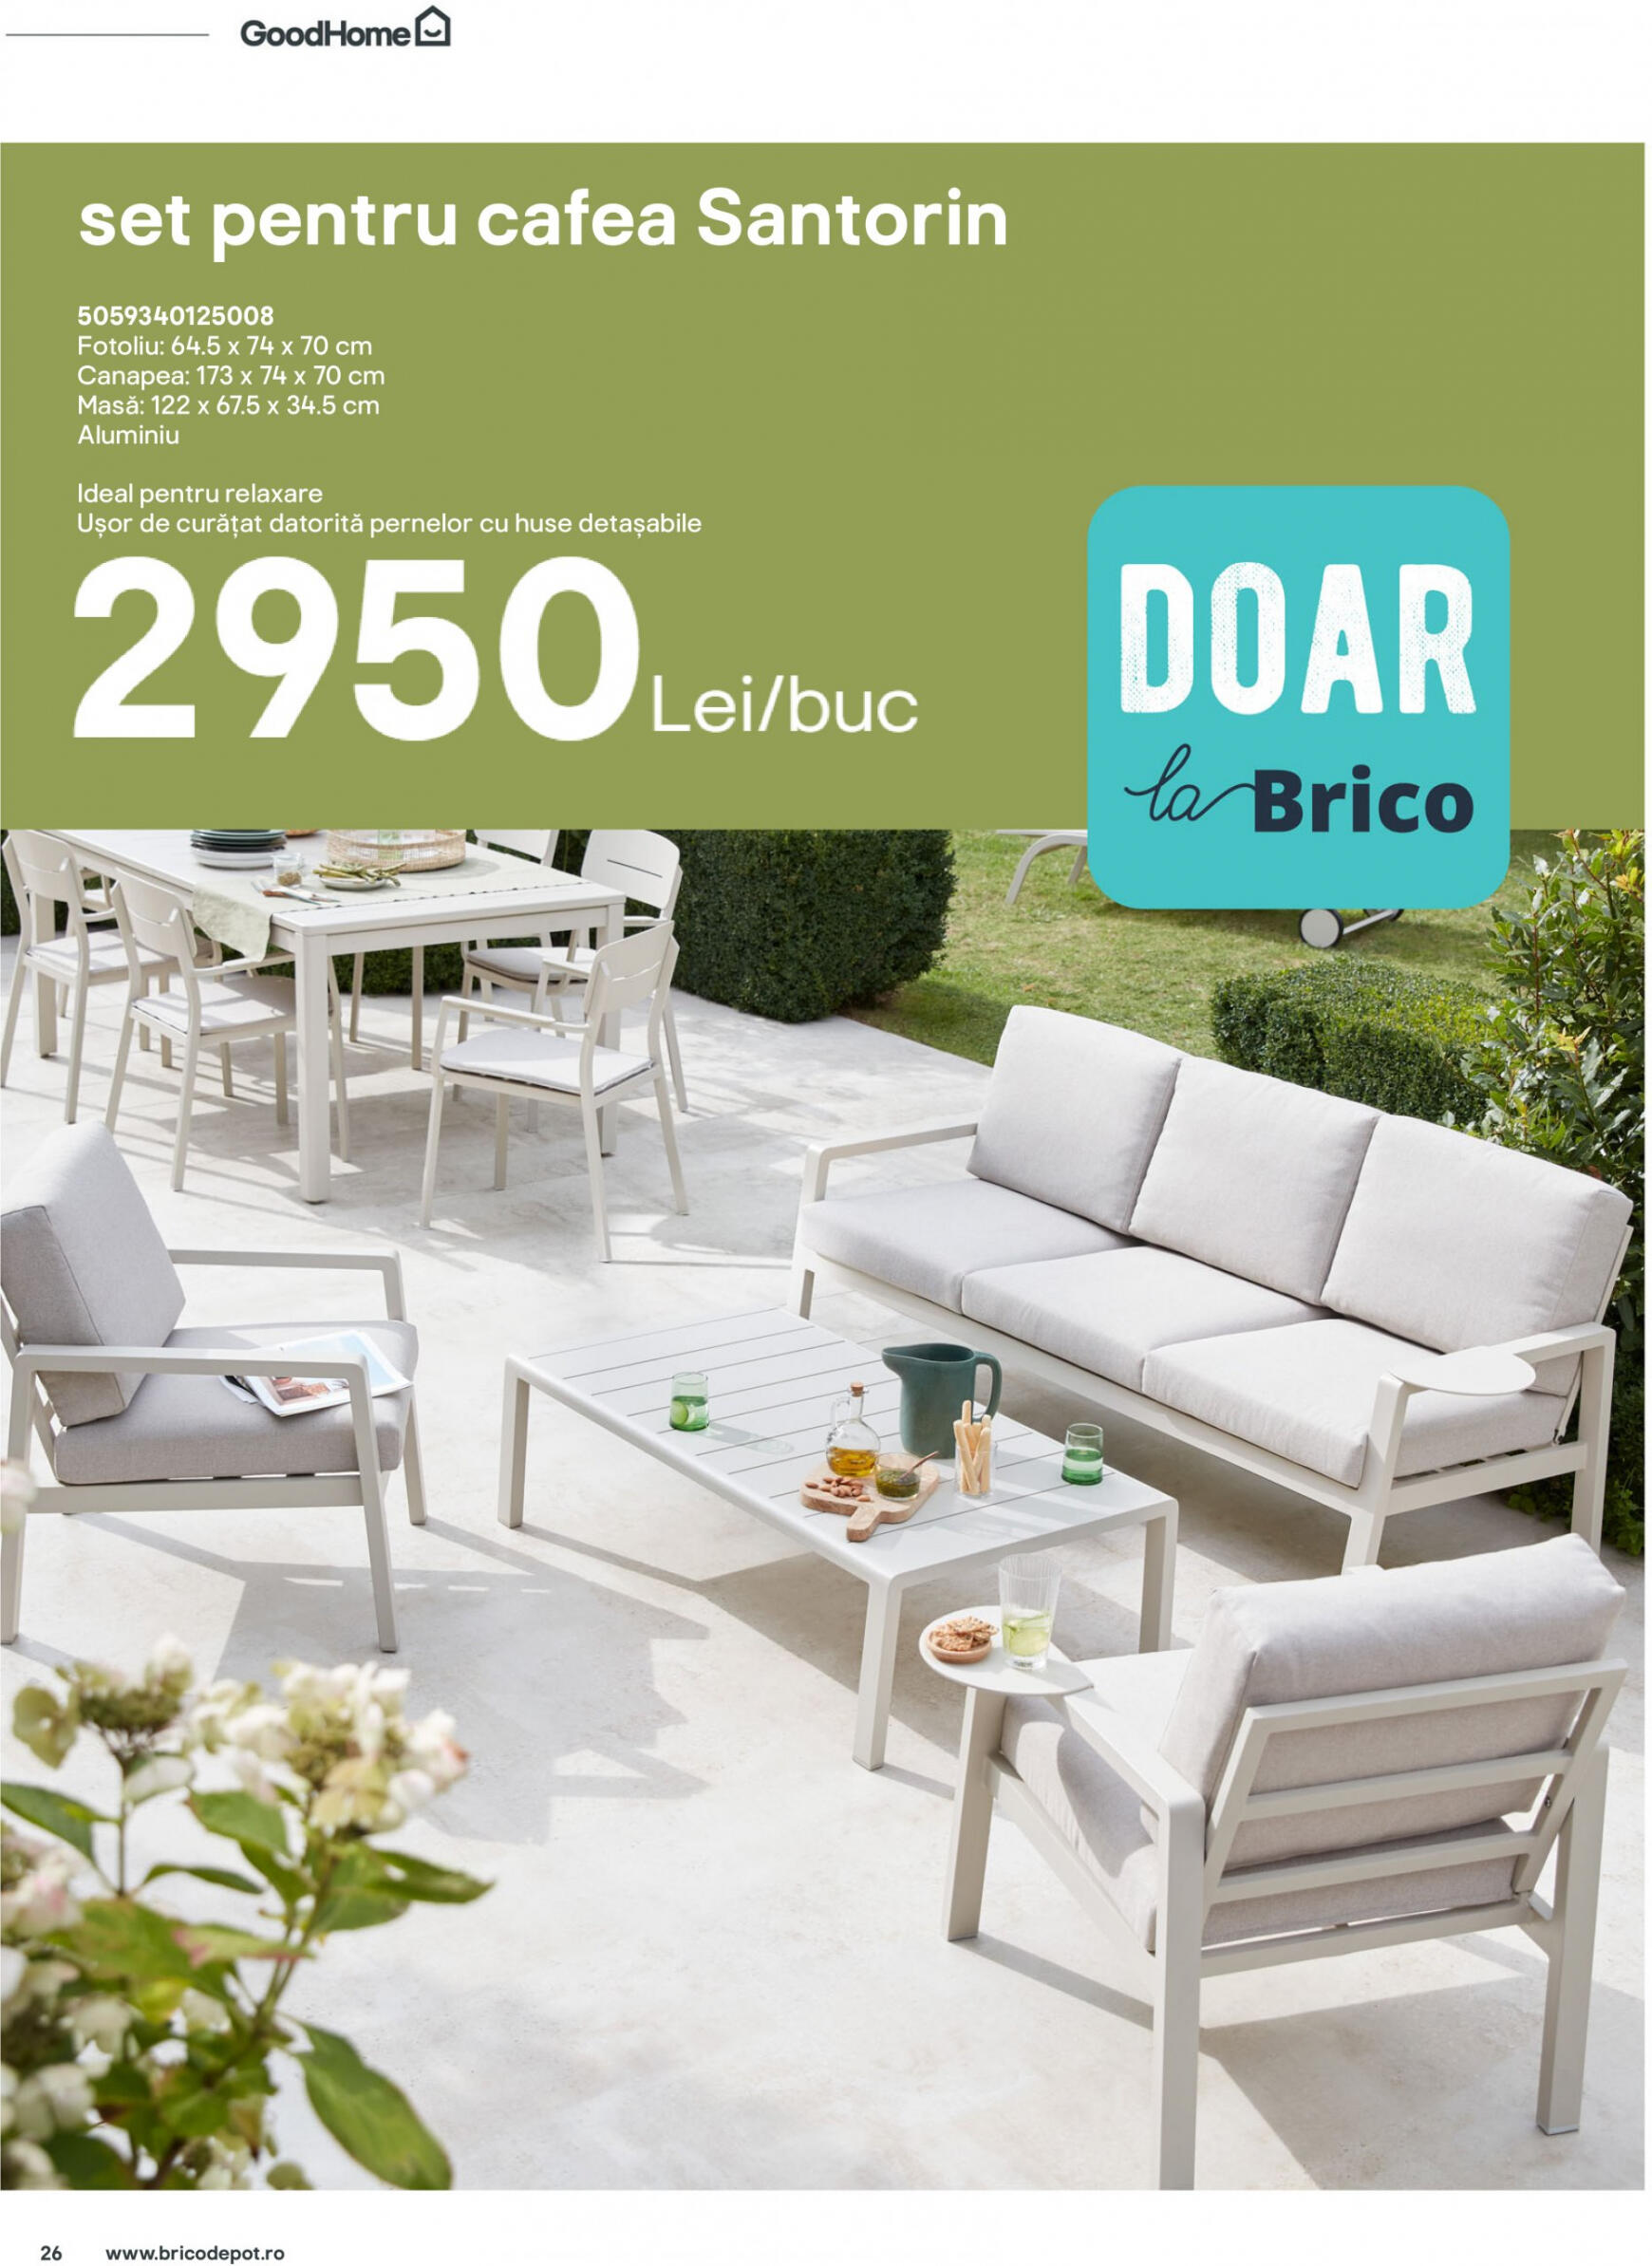 brico-depot - Catalog nou Brico Depot 22.04. - 30.06. - page: 26